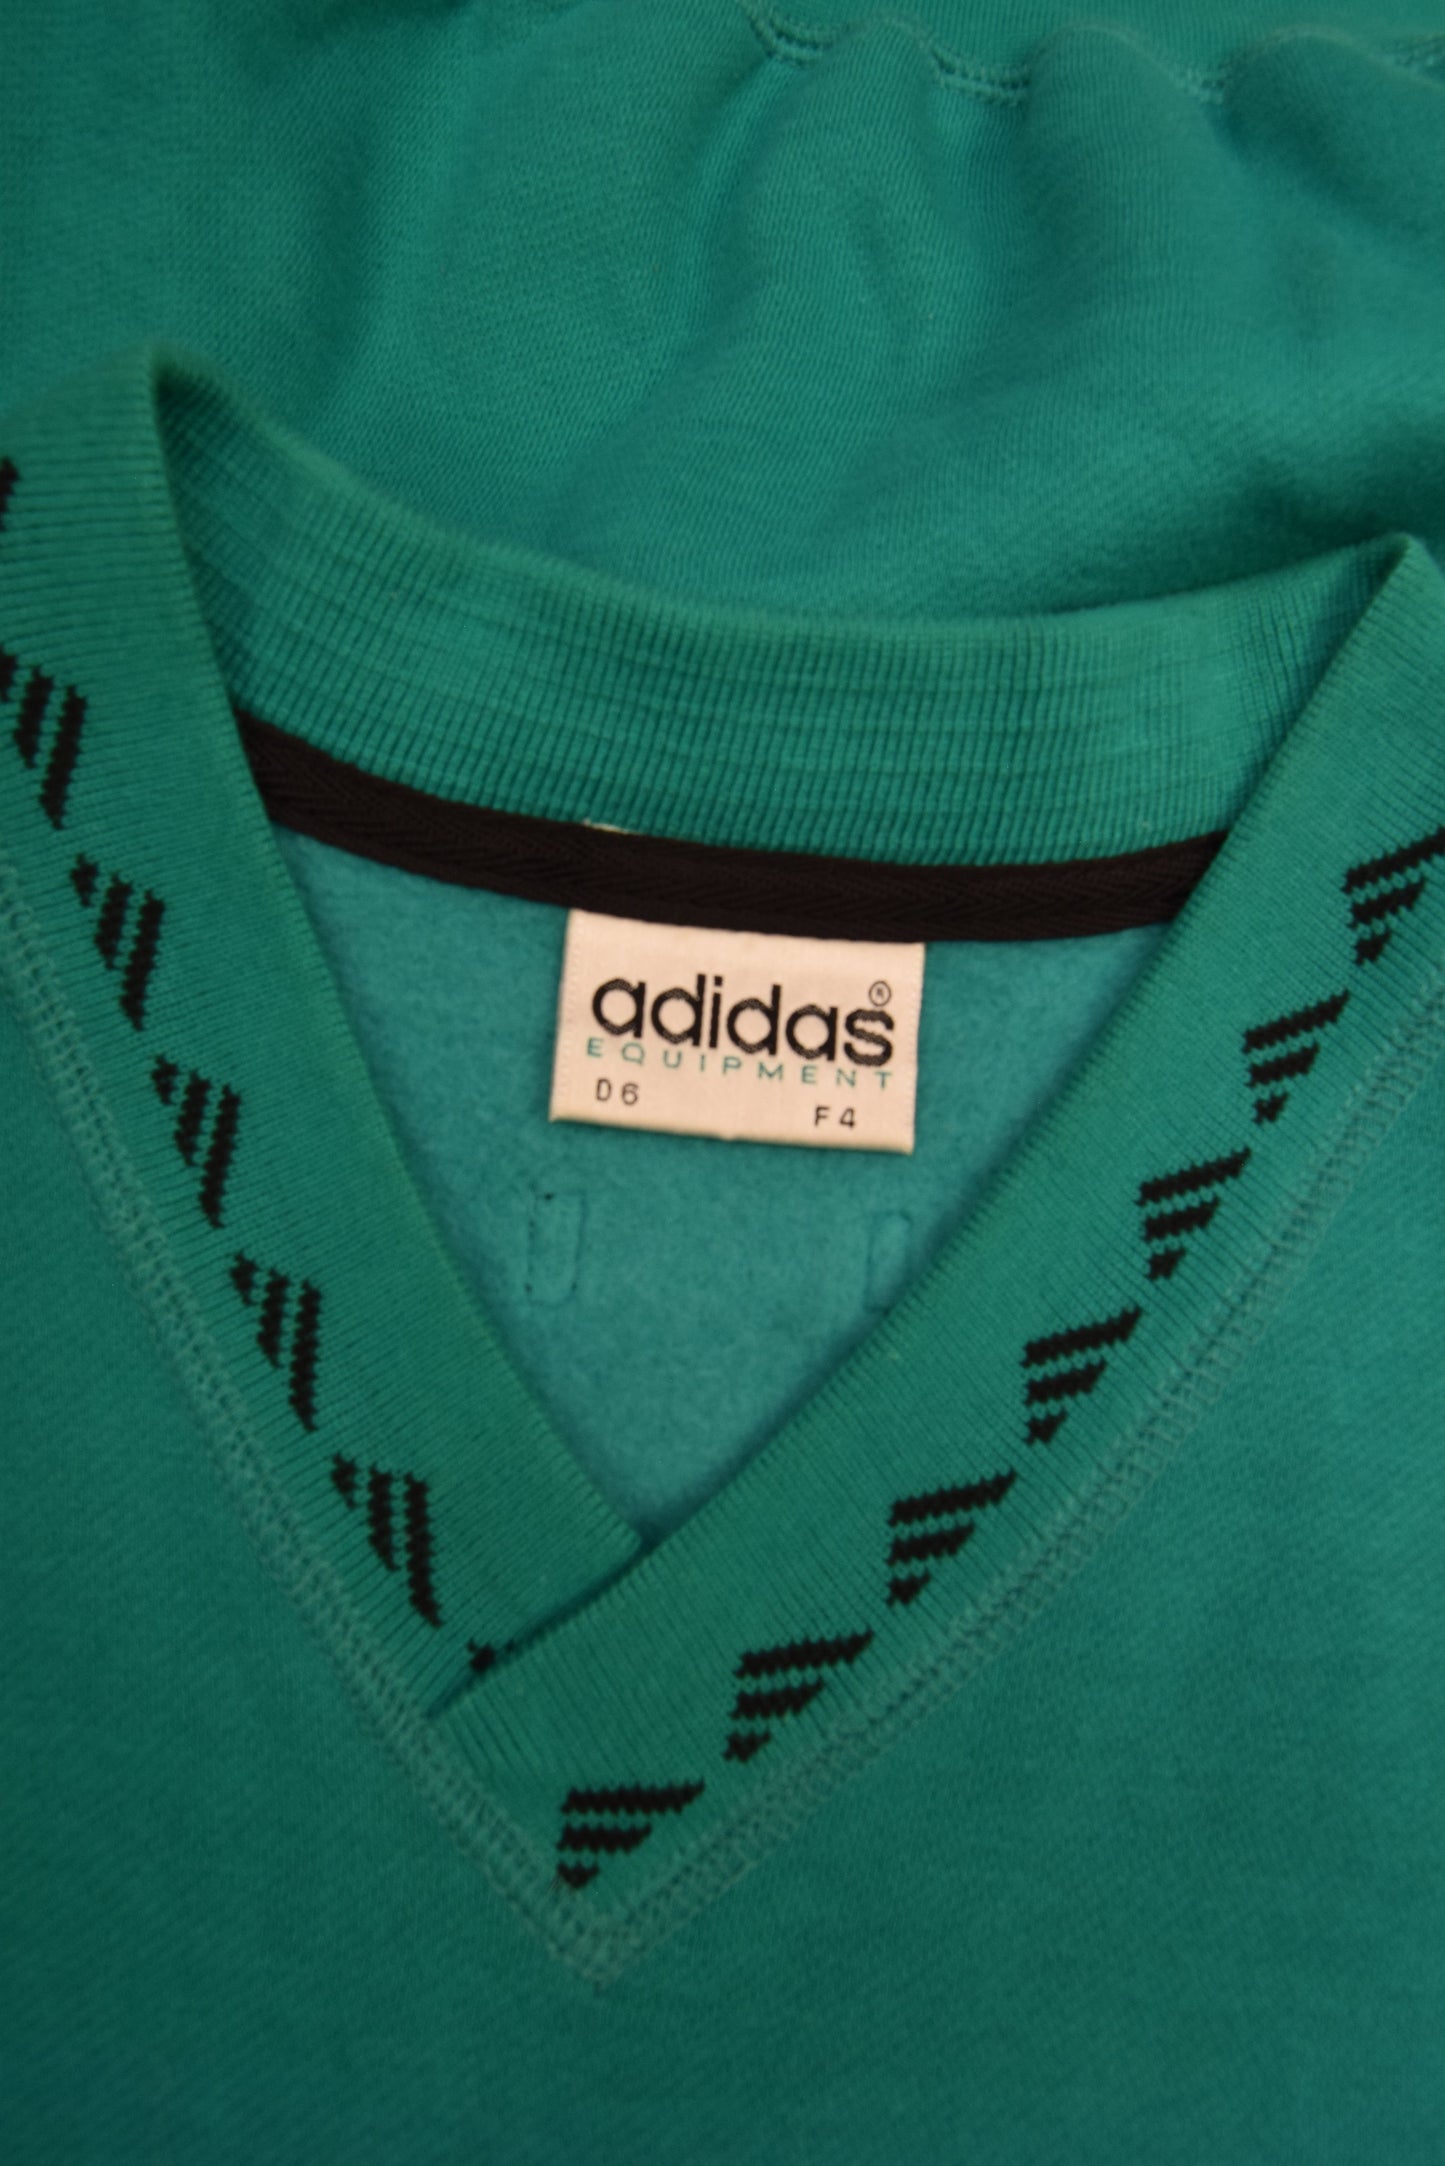 90's Adidas Equipment Vest Green Size M